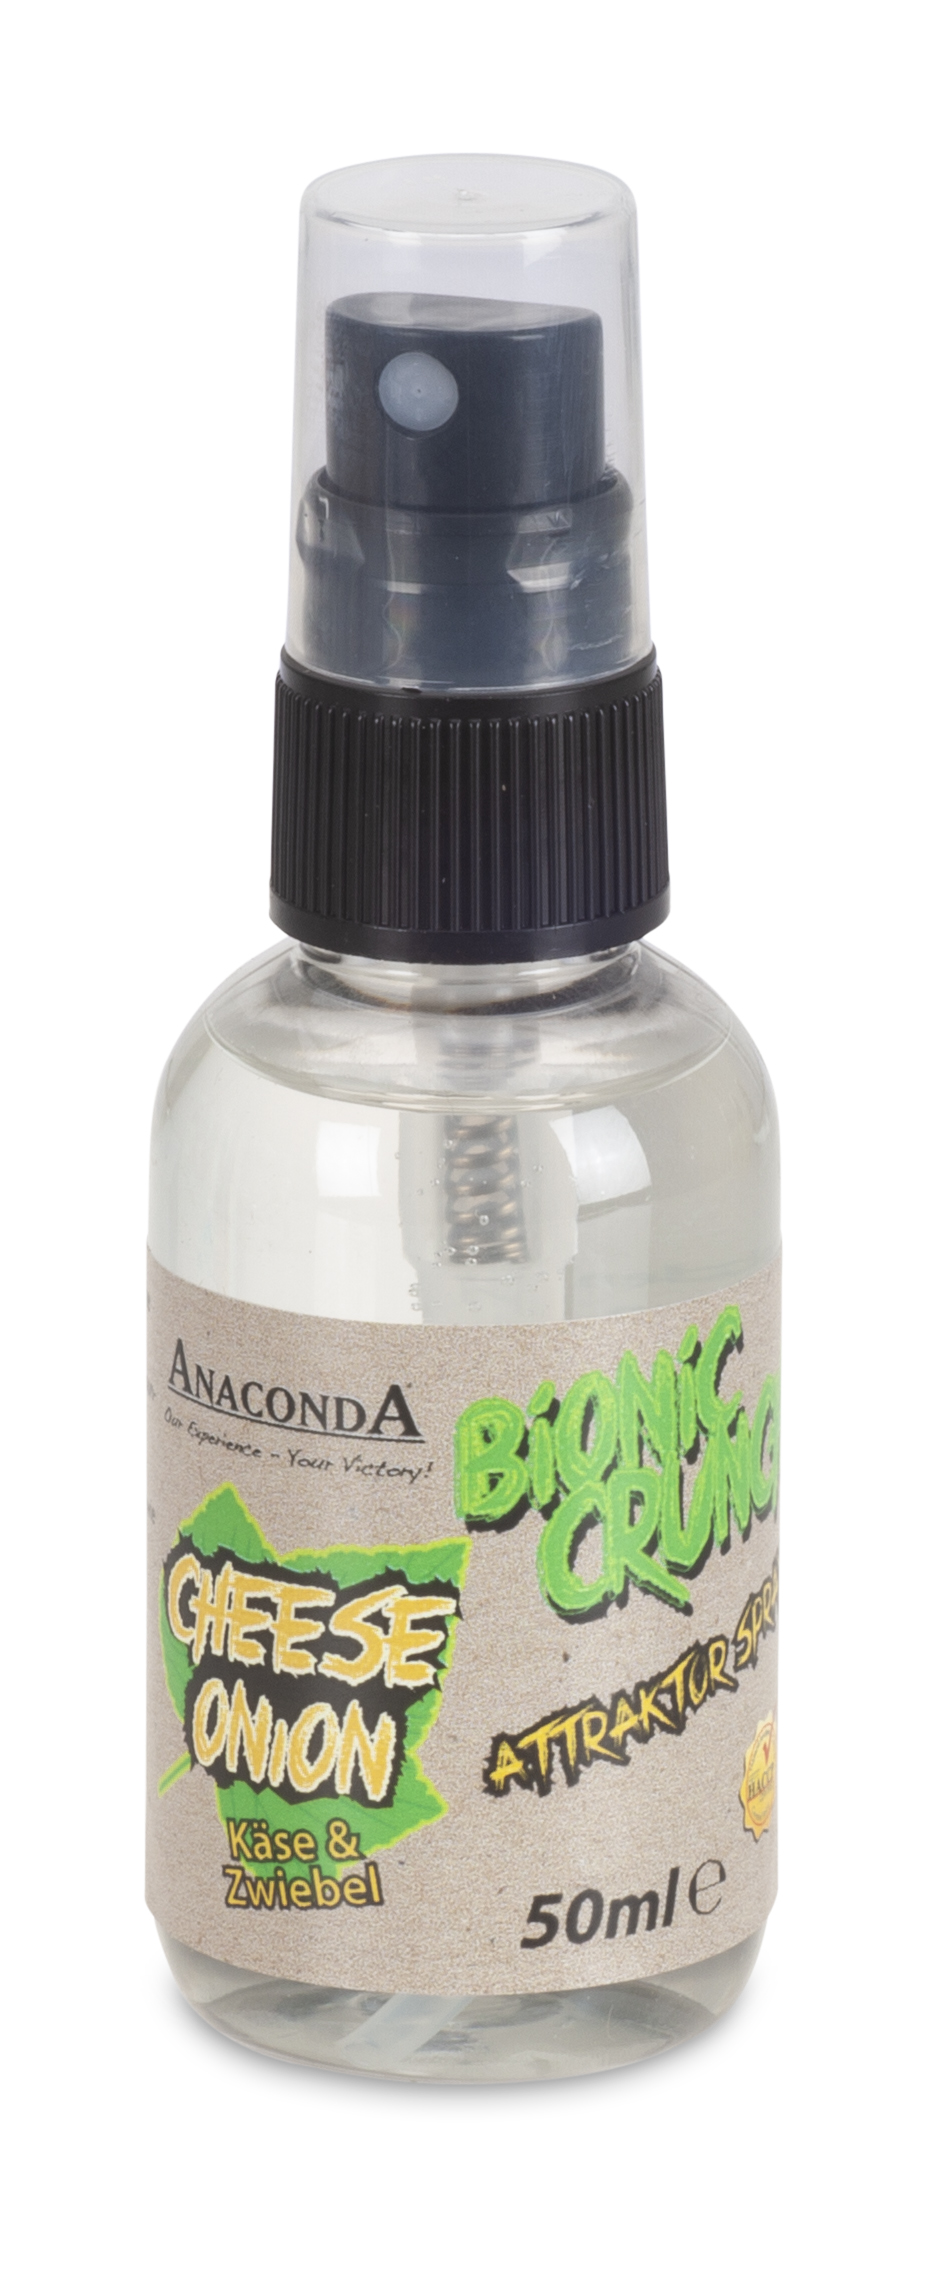 Anaconda Spray Attraktor Spray Bionic Crunch 50ml